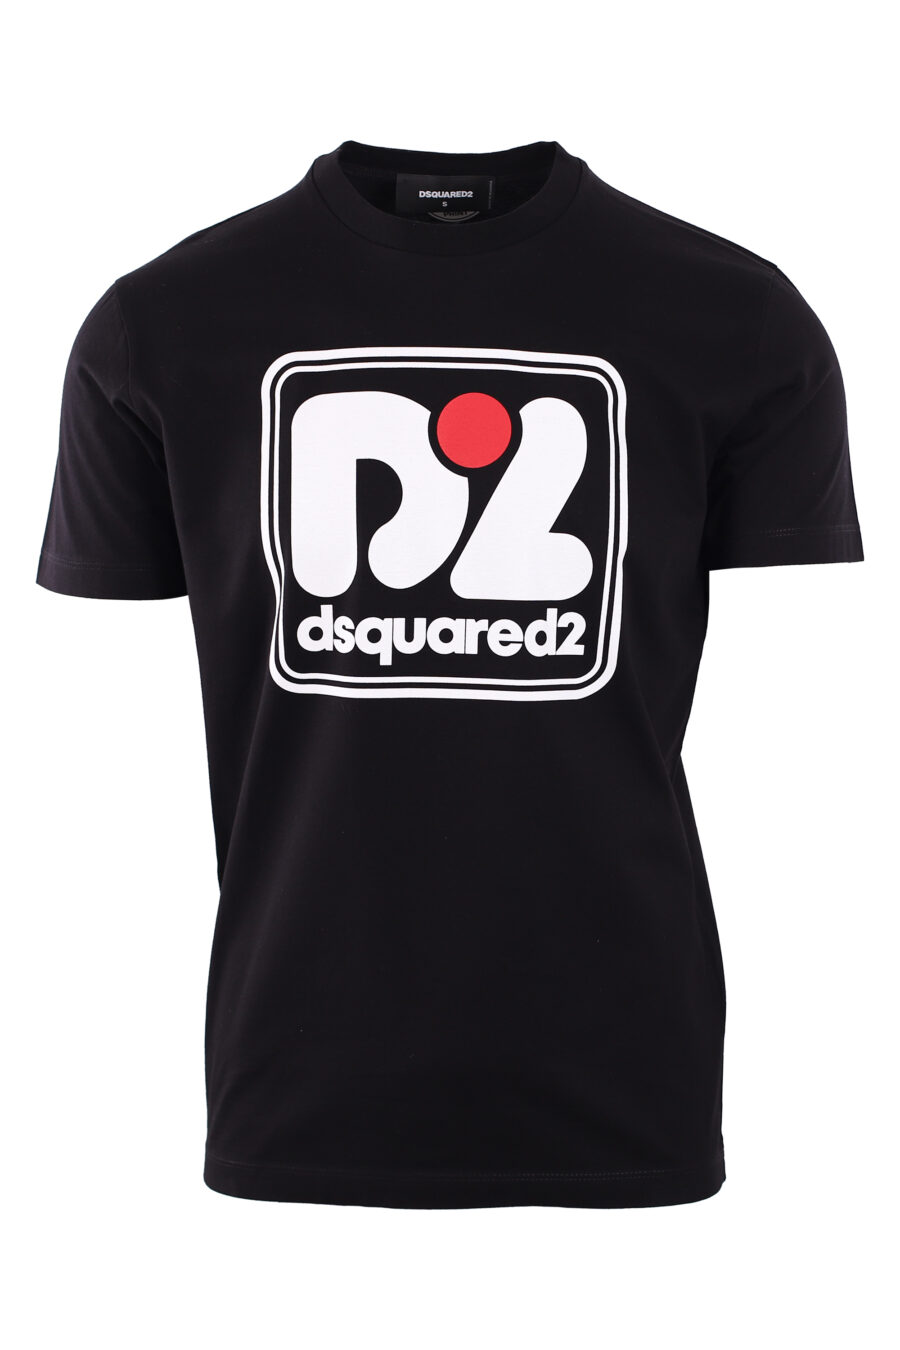 Black T-shirt with white square "D2" logo - IMG 2899